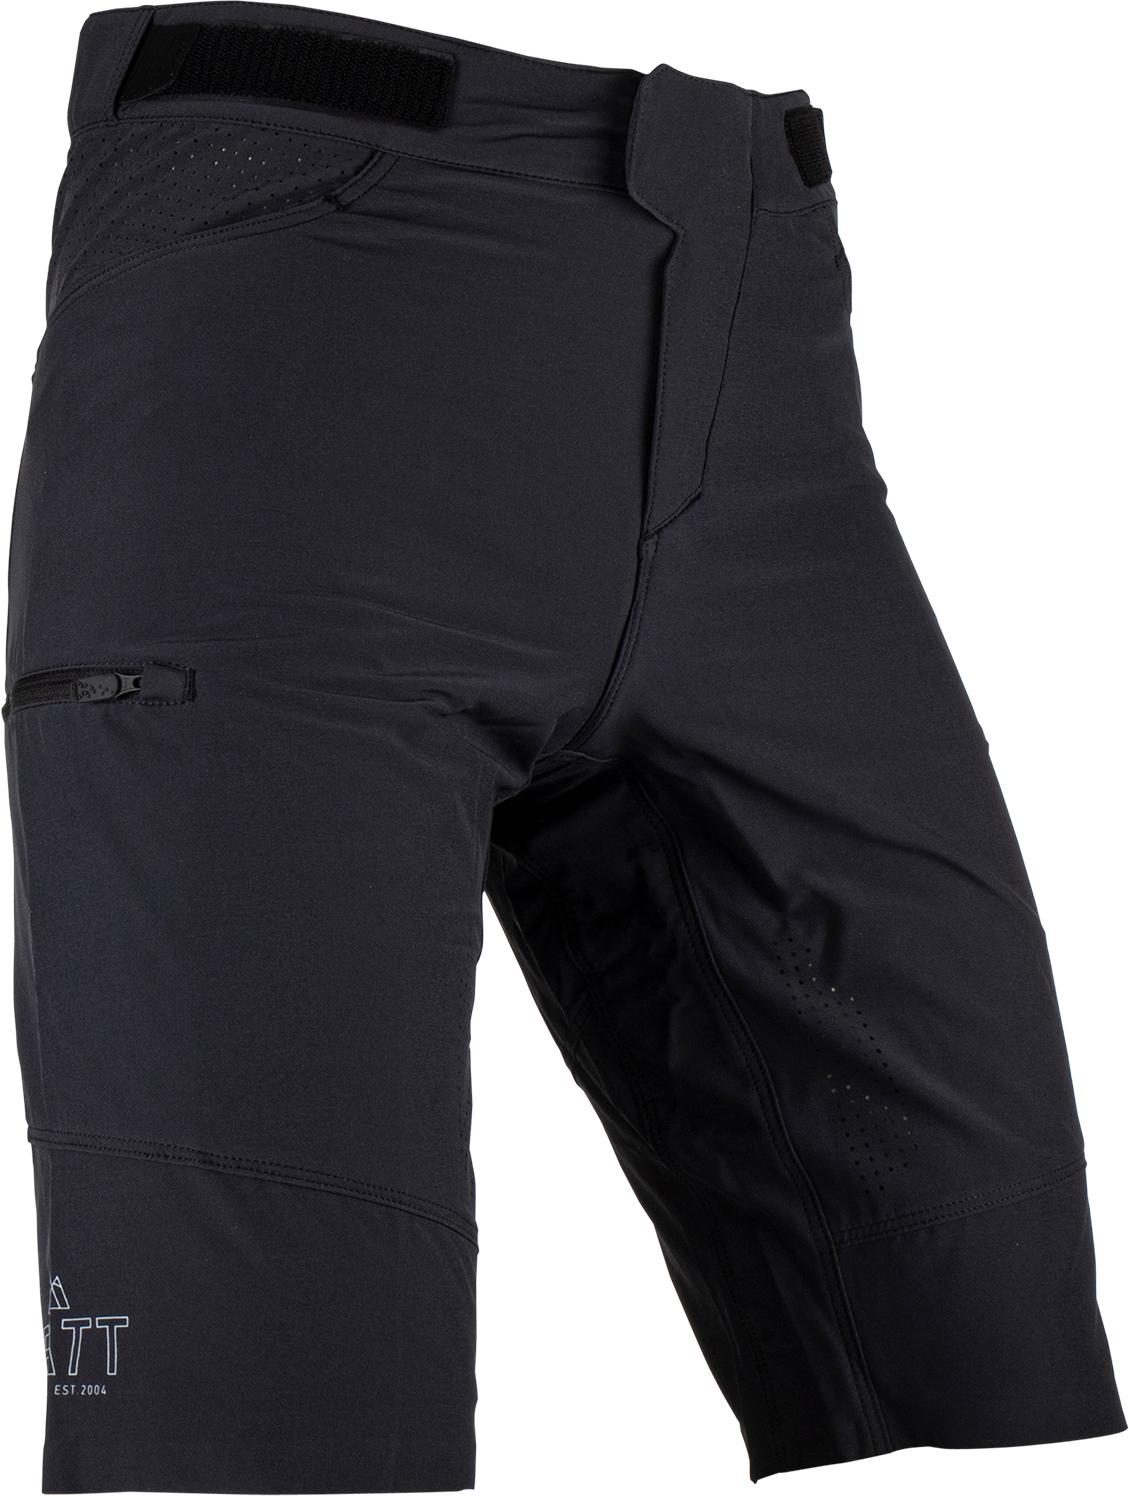 Leatt Mtb Trail 3.0 Shorts - Black